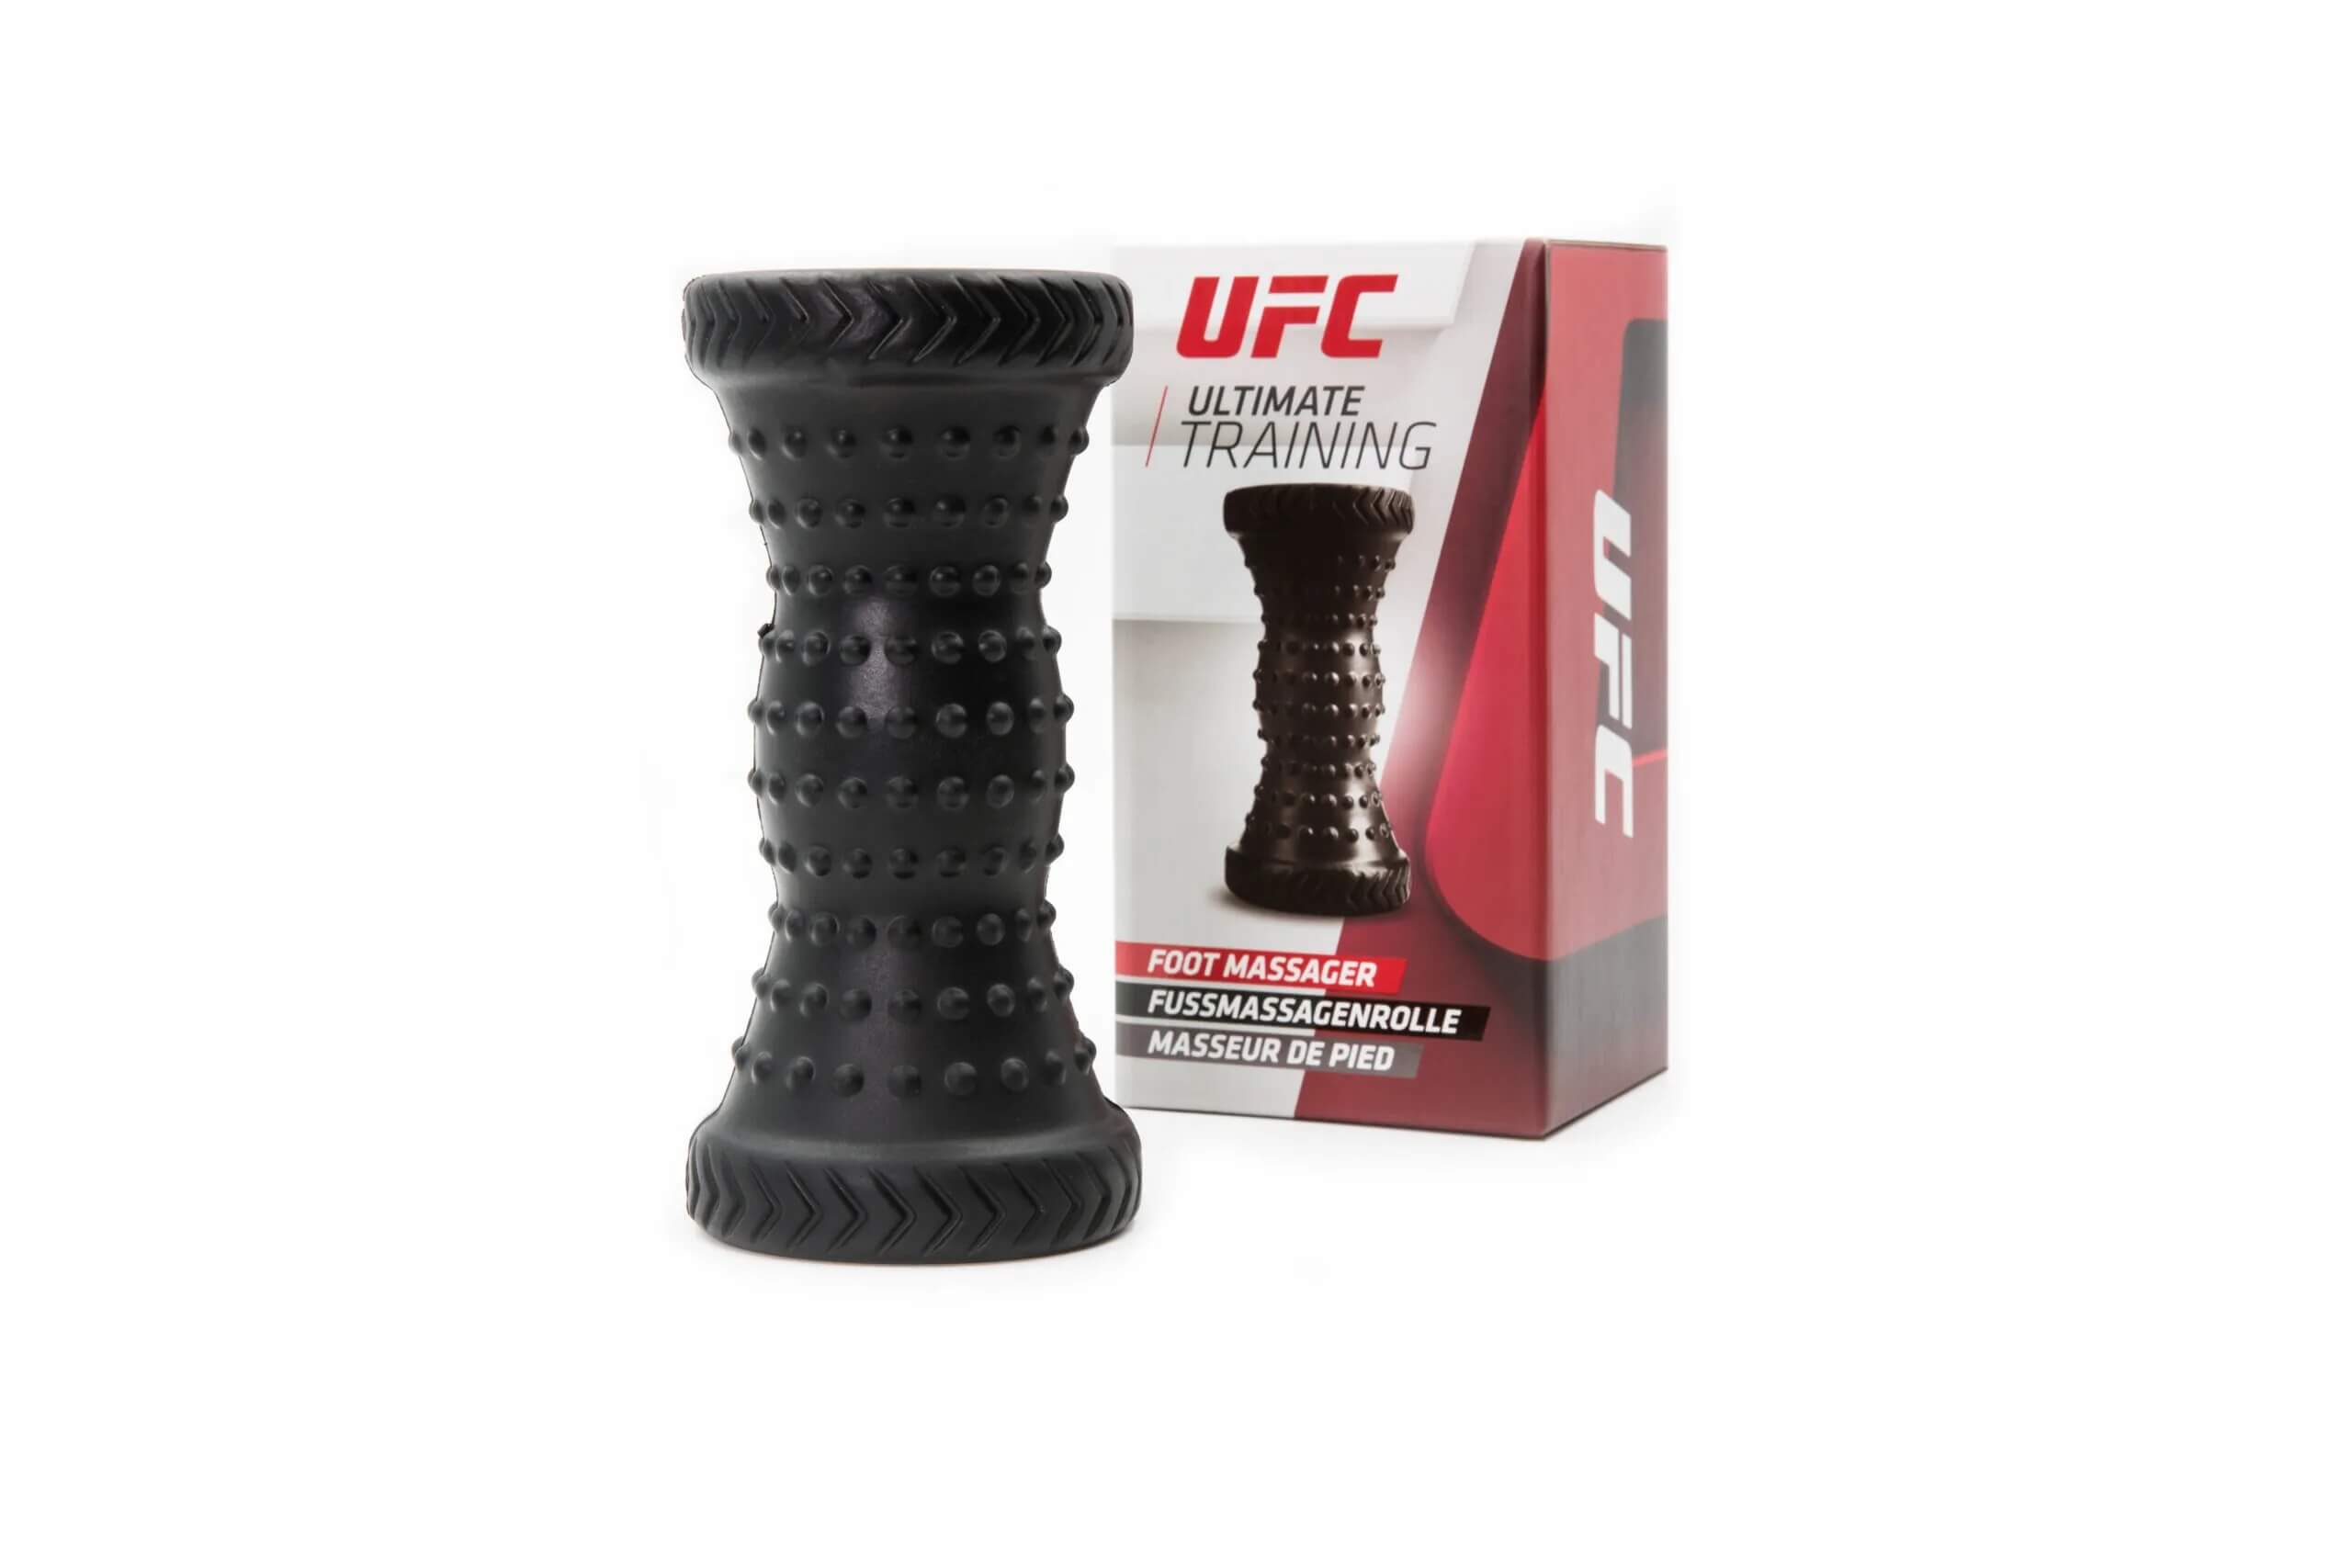 Foot Massage UFC UHA-69731